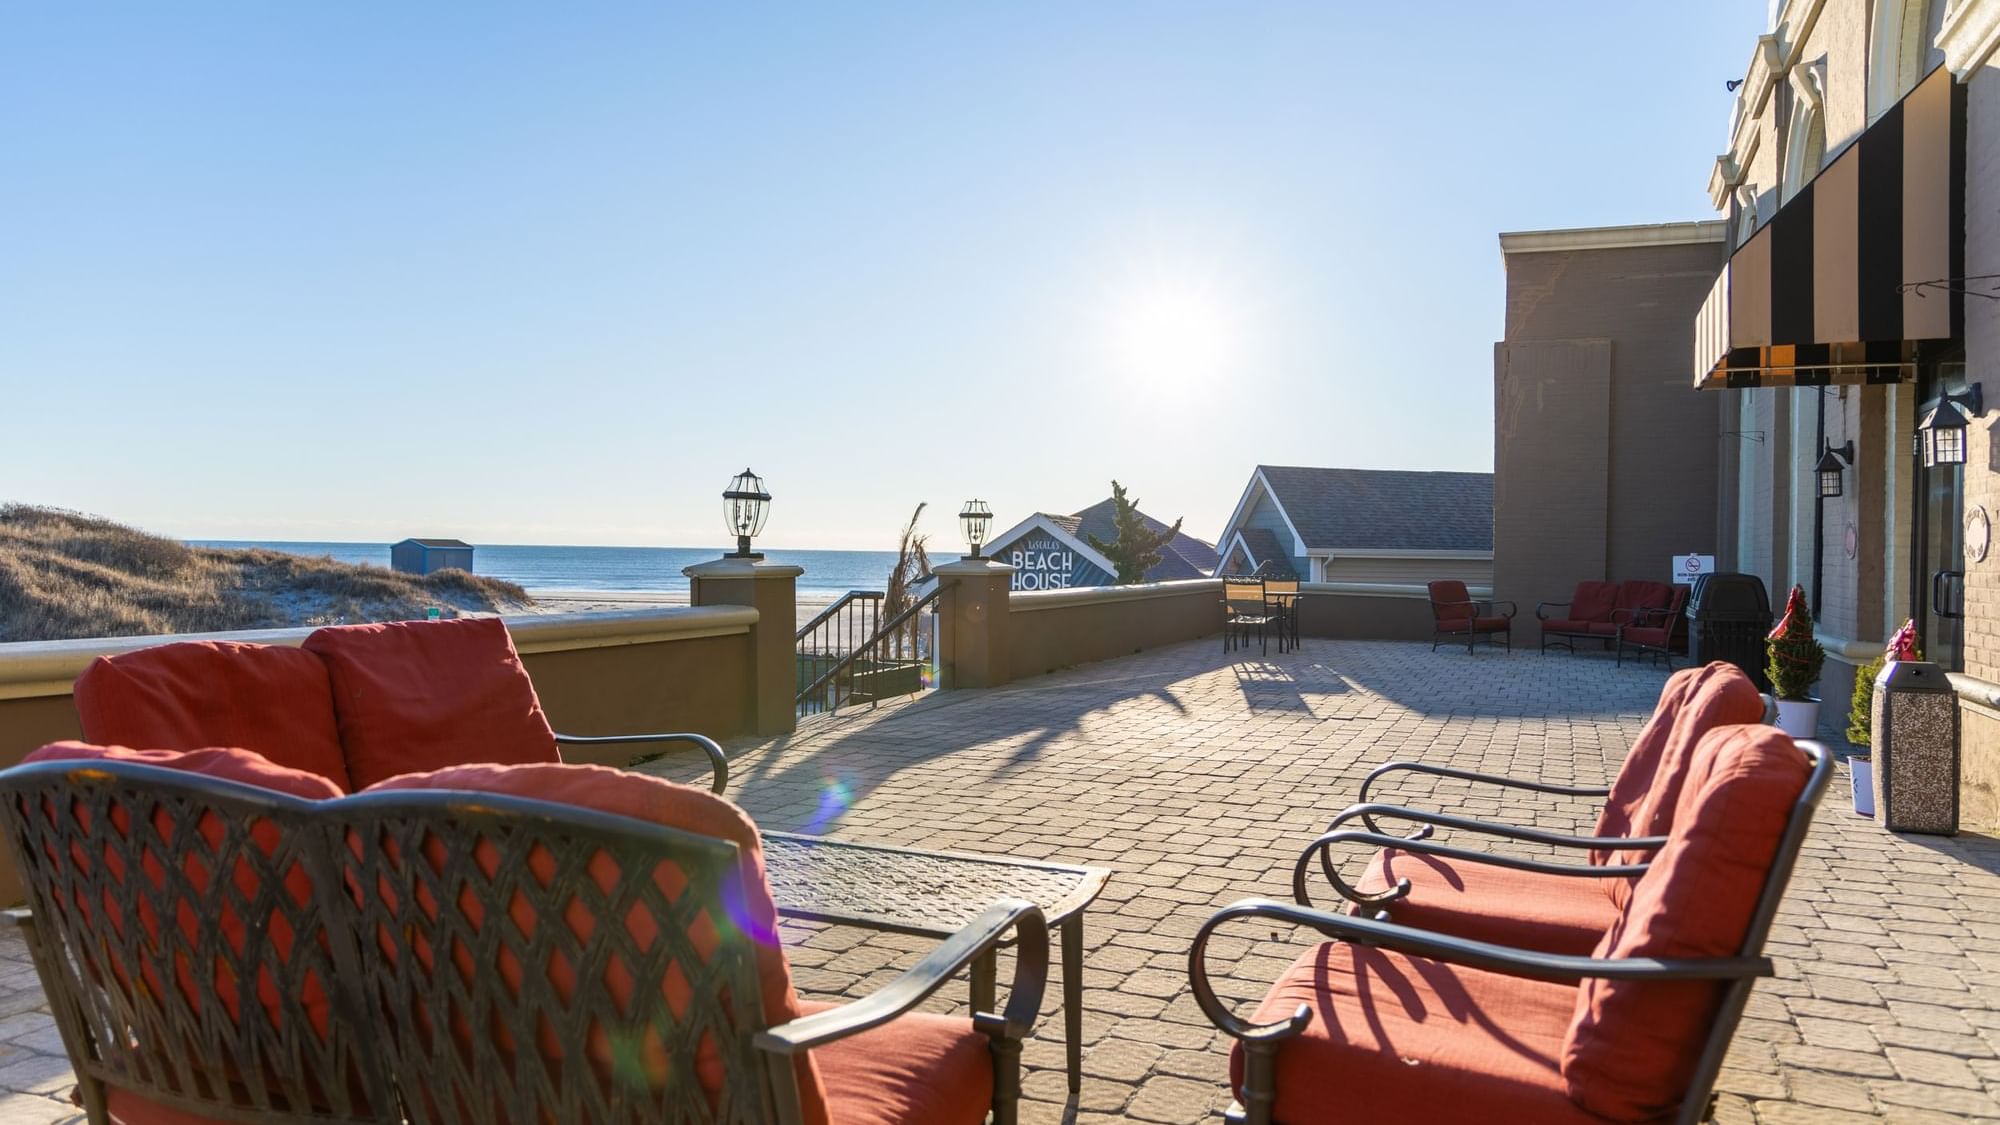  Entry deck patio seating at Legacy Vacation Resorts 